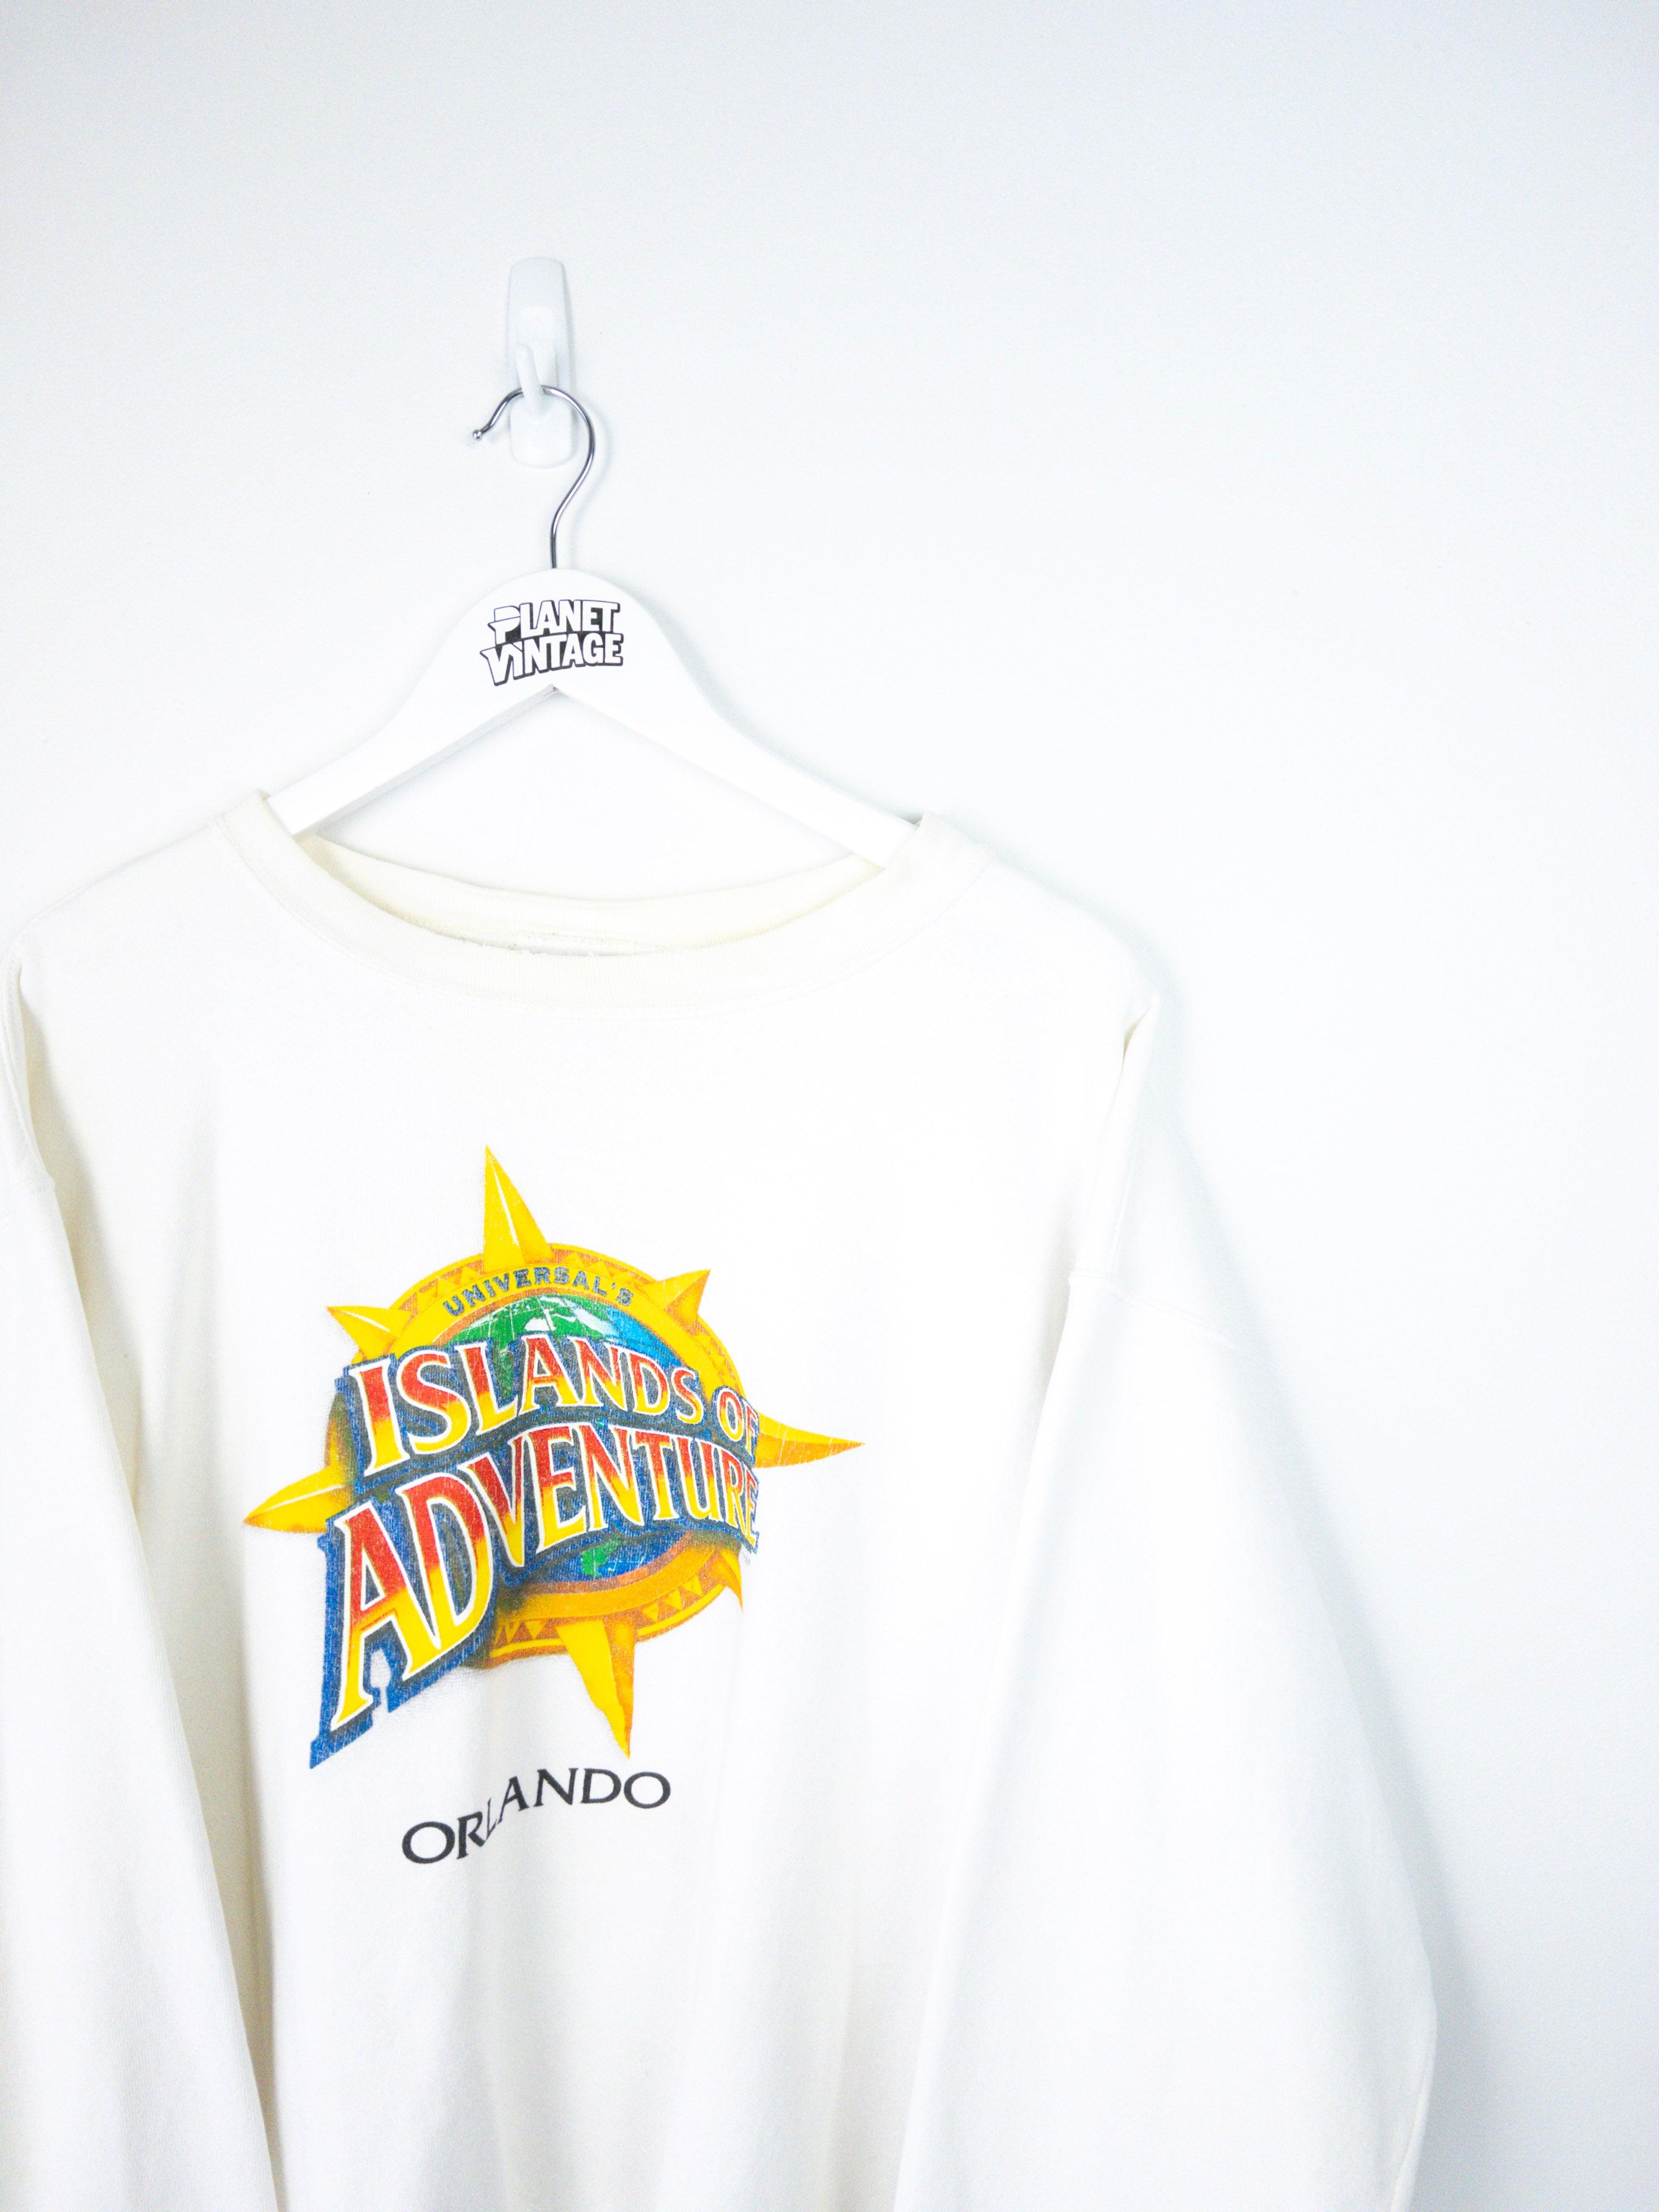 Universal's Islands of Adventure Sweatshirt (M) - Planet Vintage Store